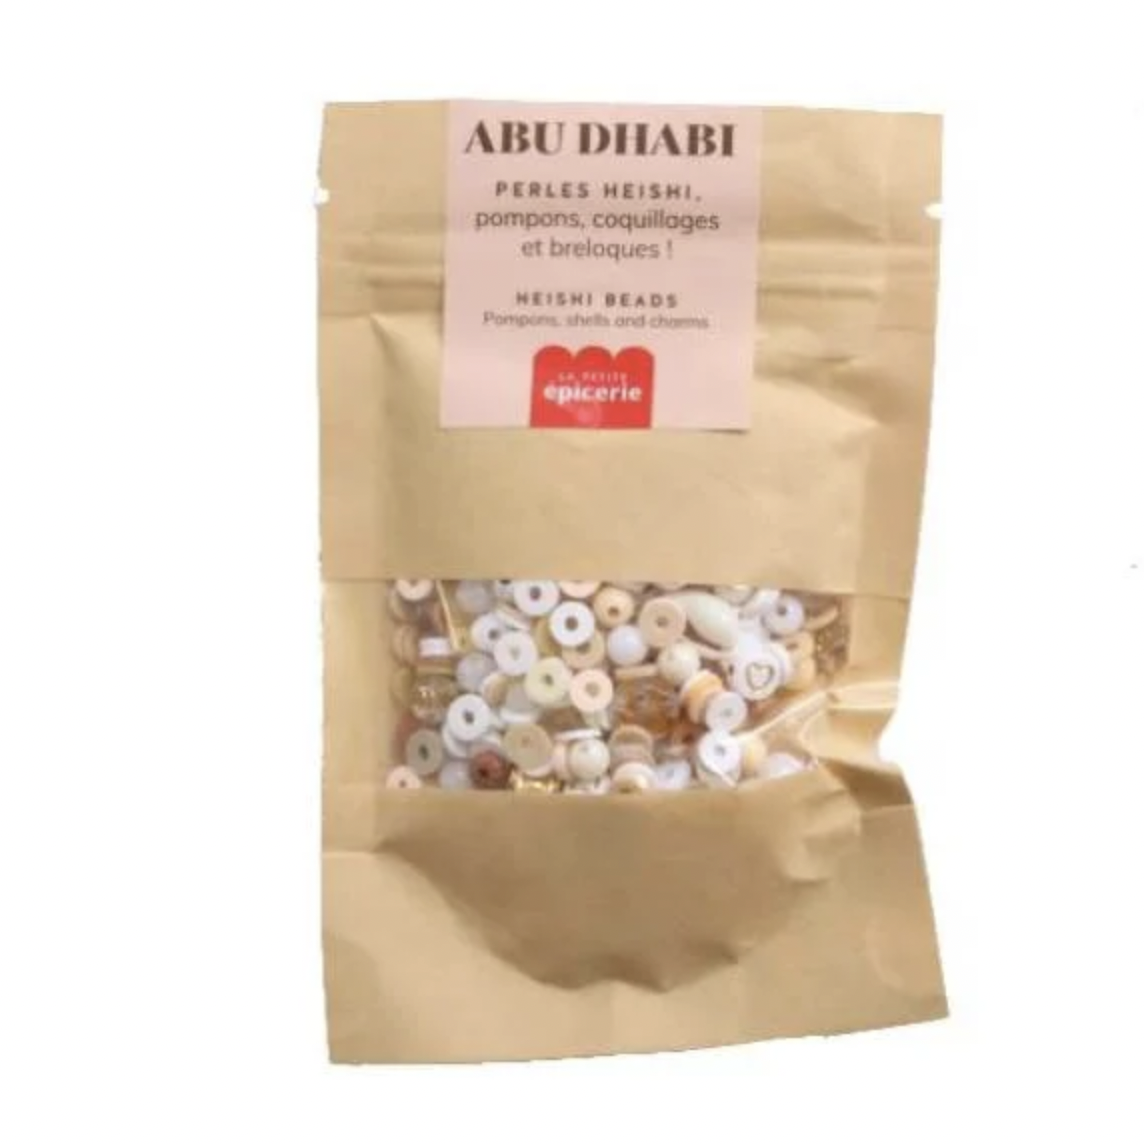 Mélange de perles heishi et de breloques - Abu Dhabi